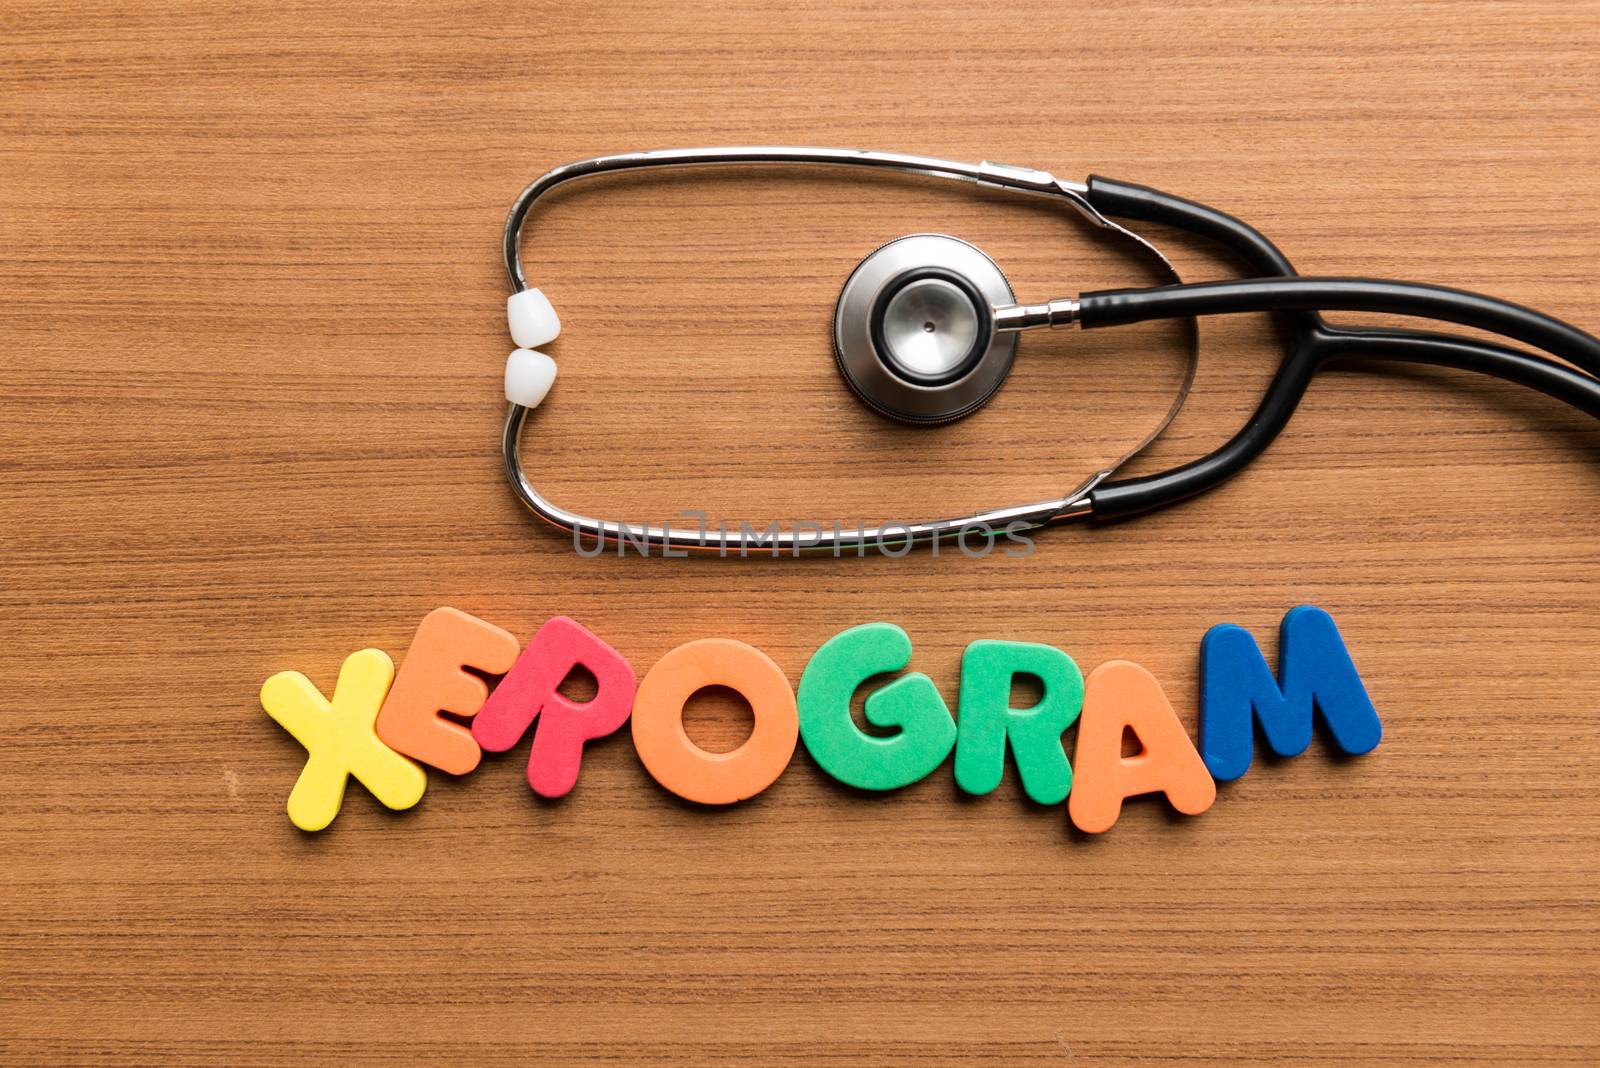 xerogram colorful word with stethoscope by sohel.parvez@hotmail.com